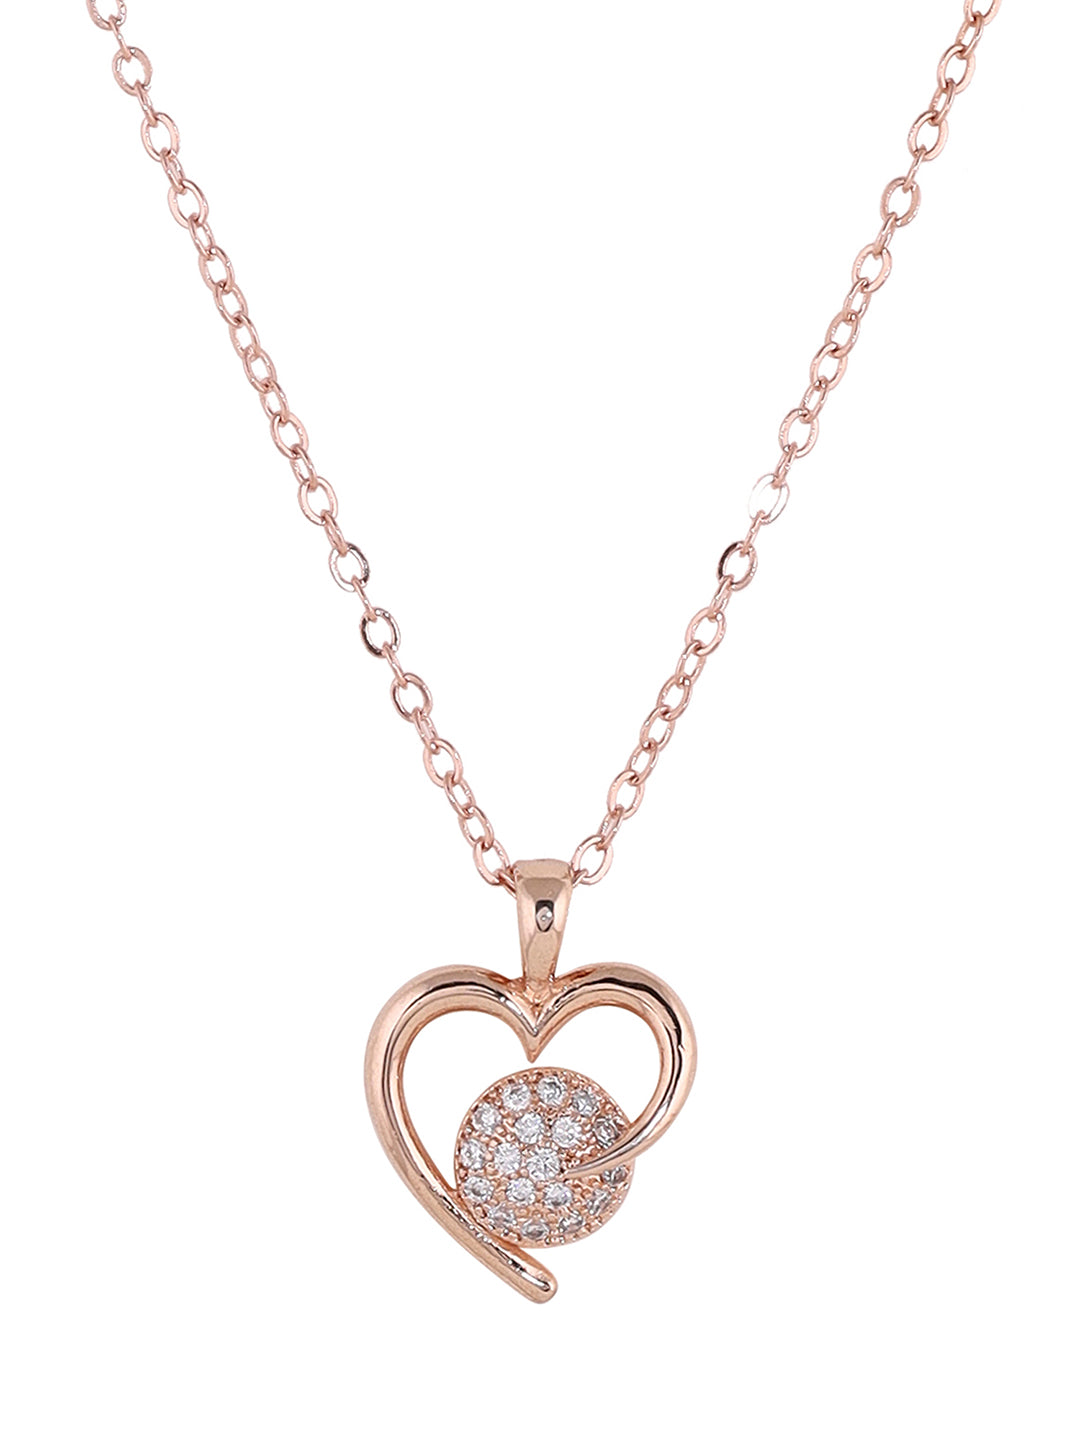 Prita American Diamond Heart-Shaped Valentine's Necklace